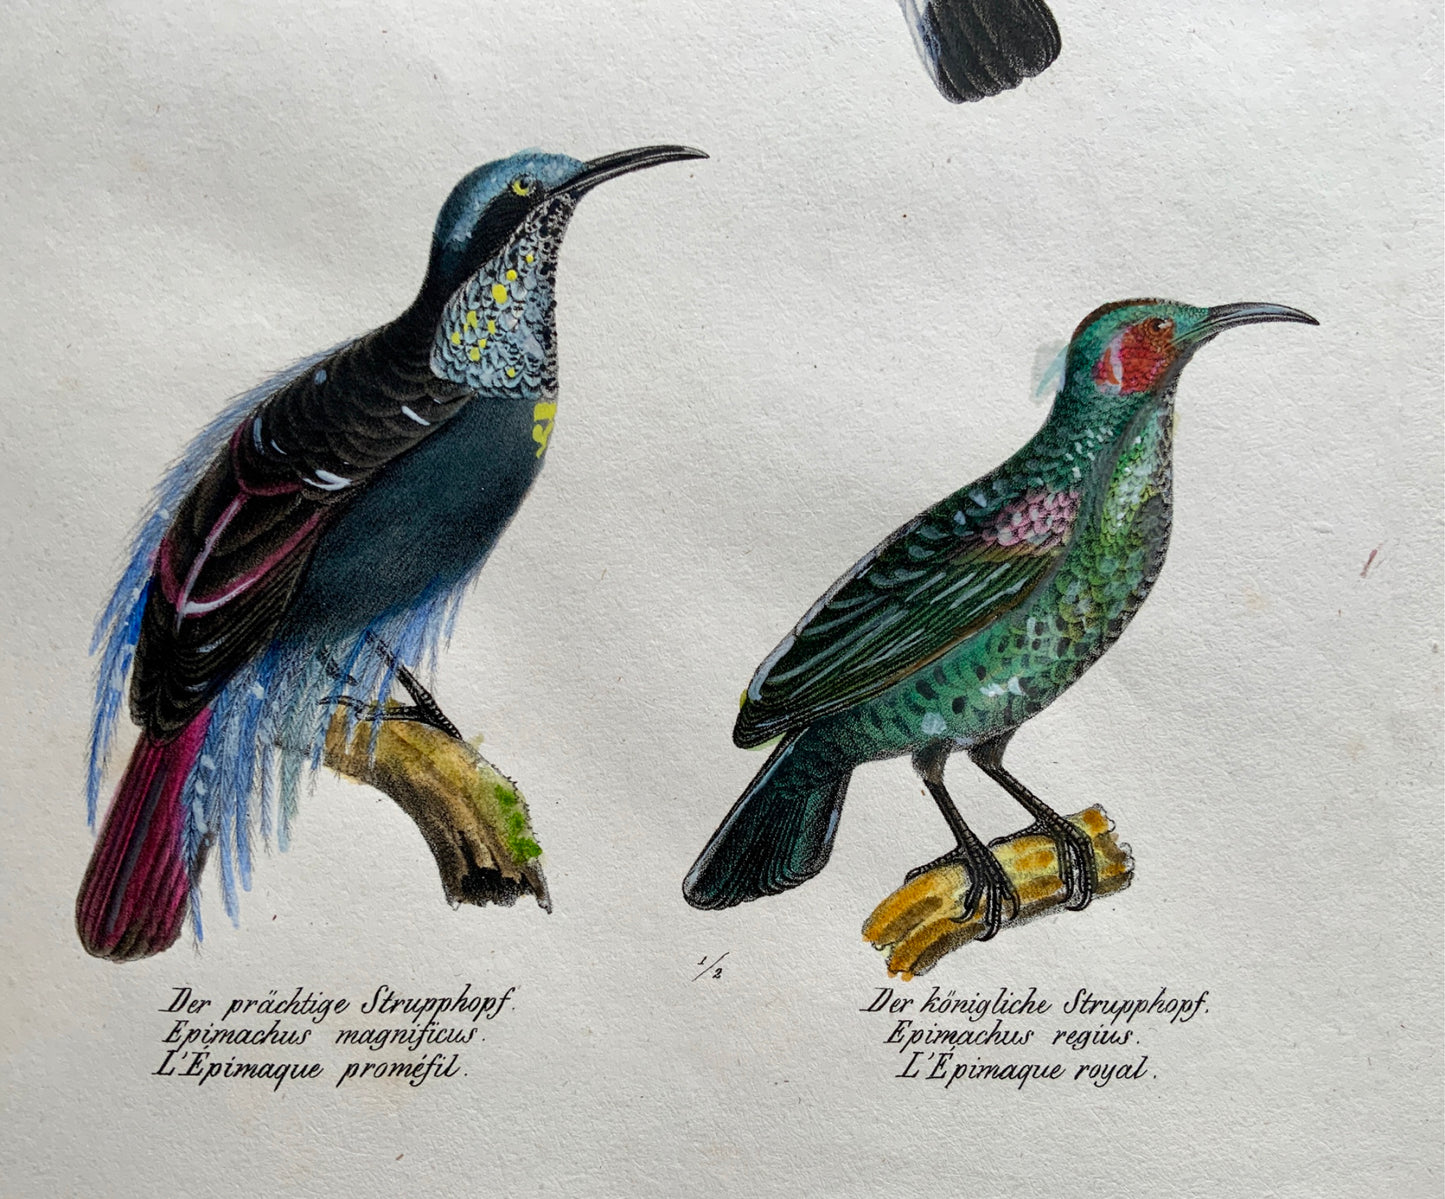 1830 HOOPOE Paradisaeidae Ornithology Brodtmann hand coloured FOLIO lithography